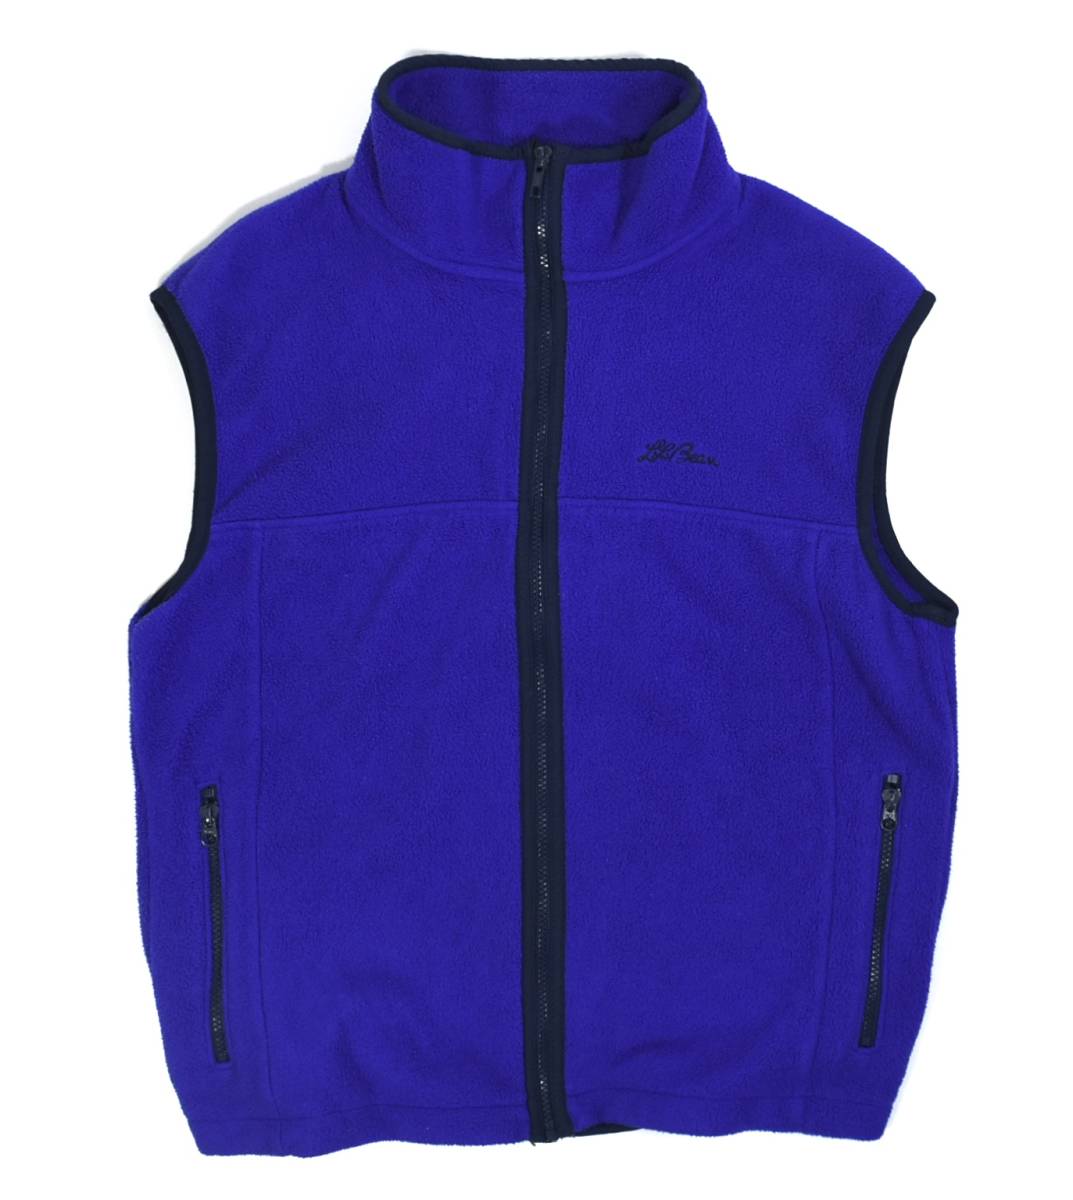 1990s L.L.Bean Fleece vest M Blue オールドエルエルビーン フリースベスト ジャケット 青 登山 アウトドア